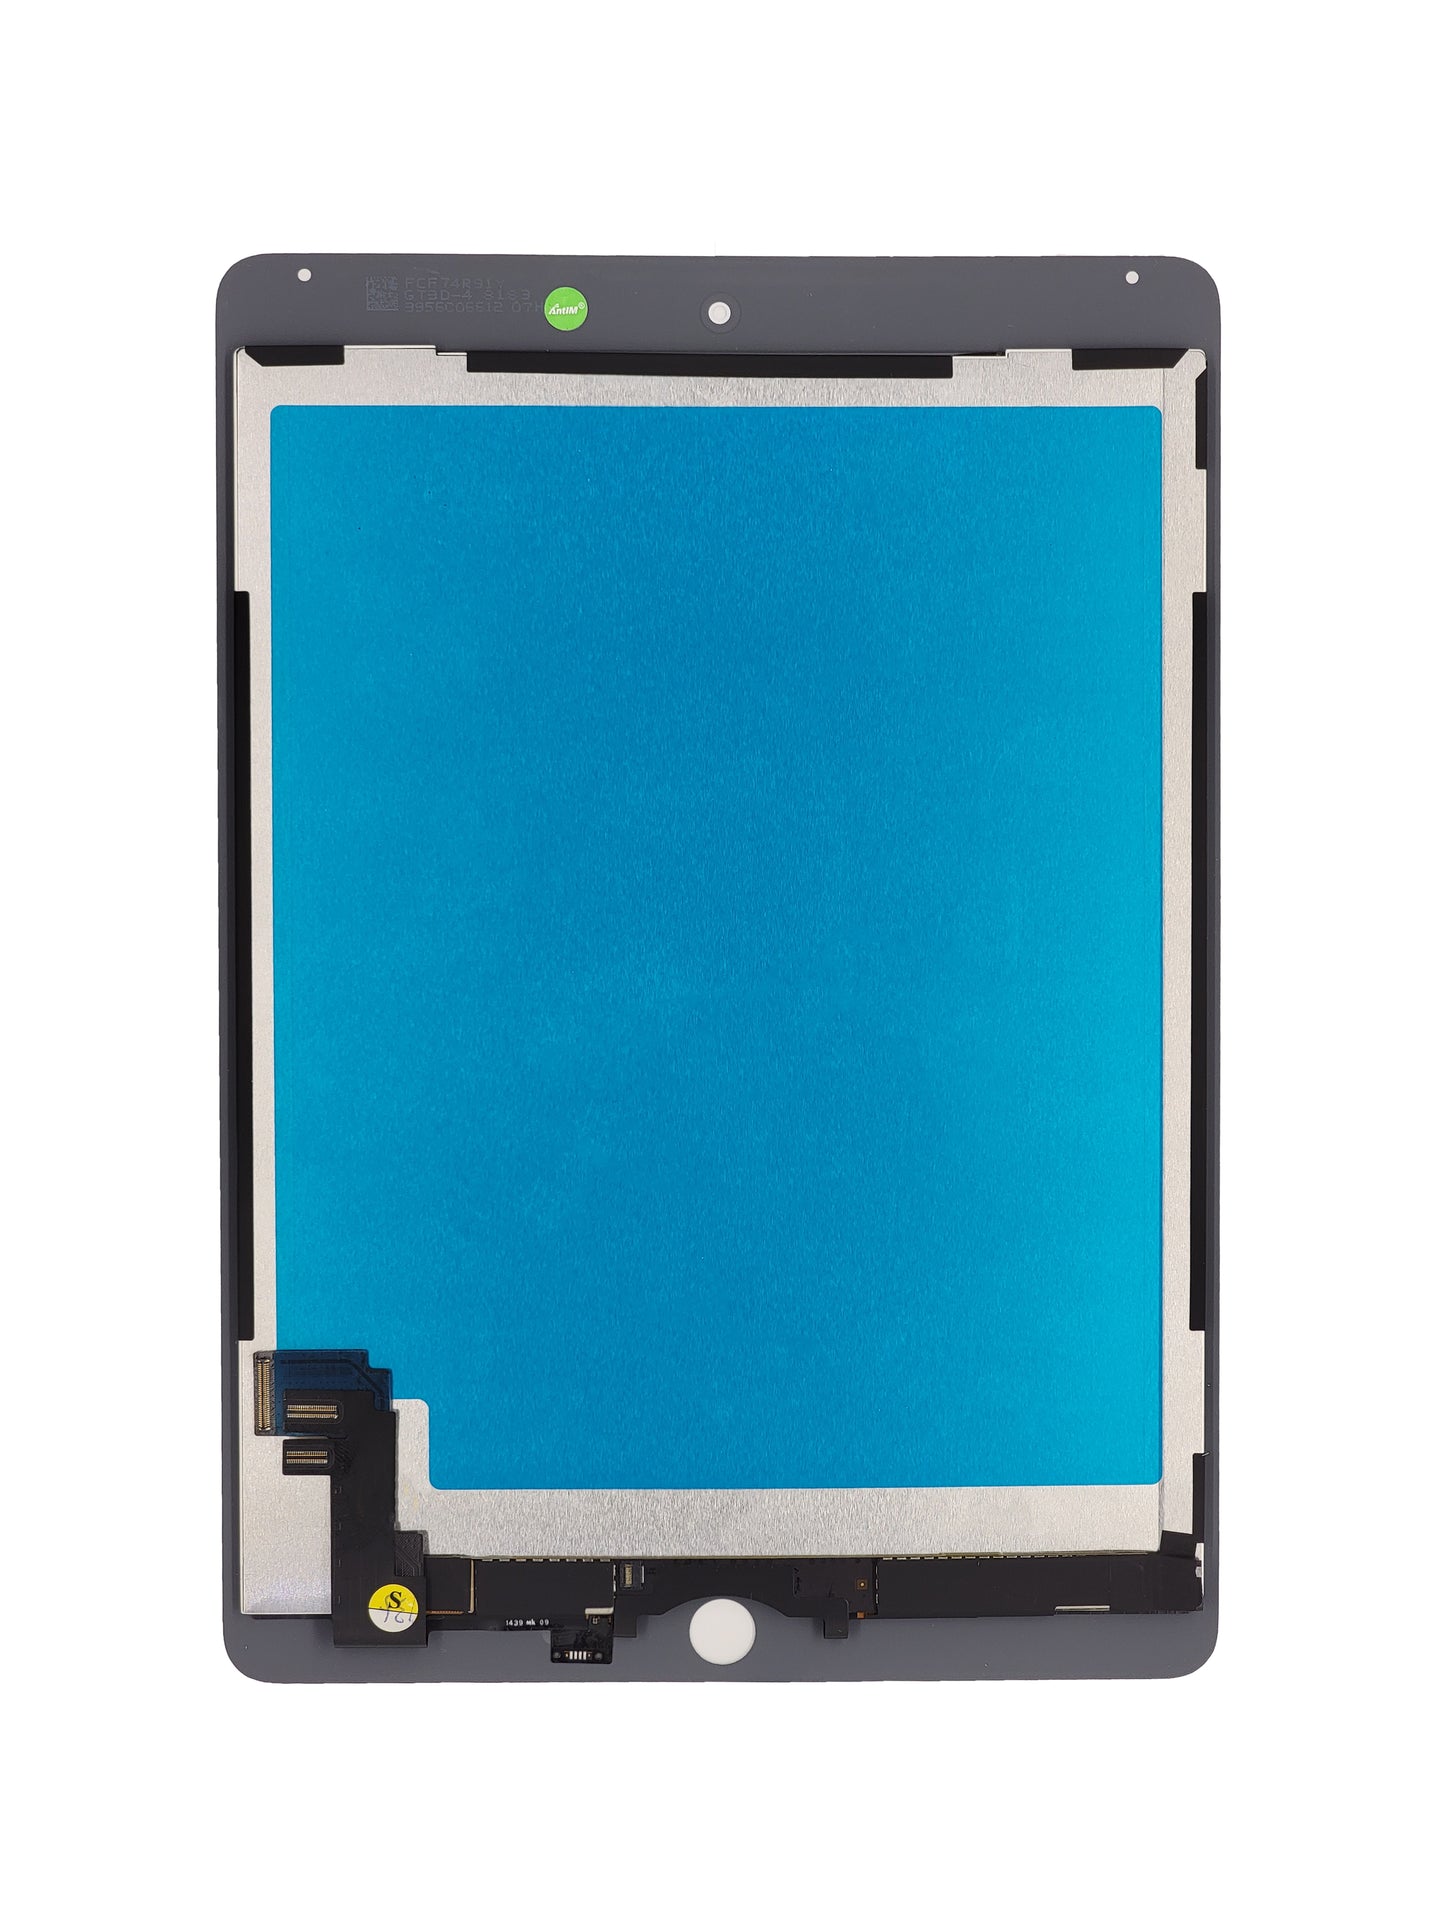 iPad Air 2 Screen Assembly (Sleep / Wake Sensor Flex Pre-Installed) (Refurbished) (White)